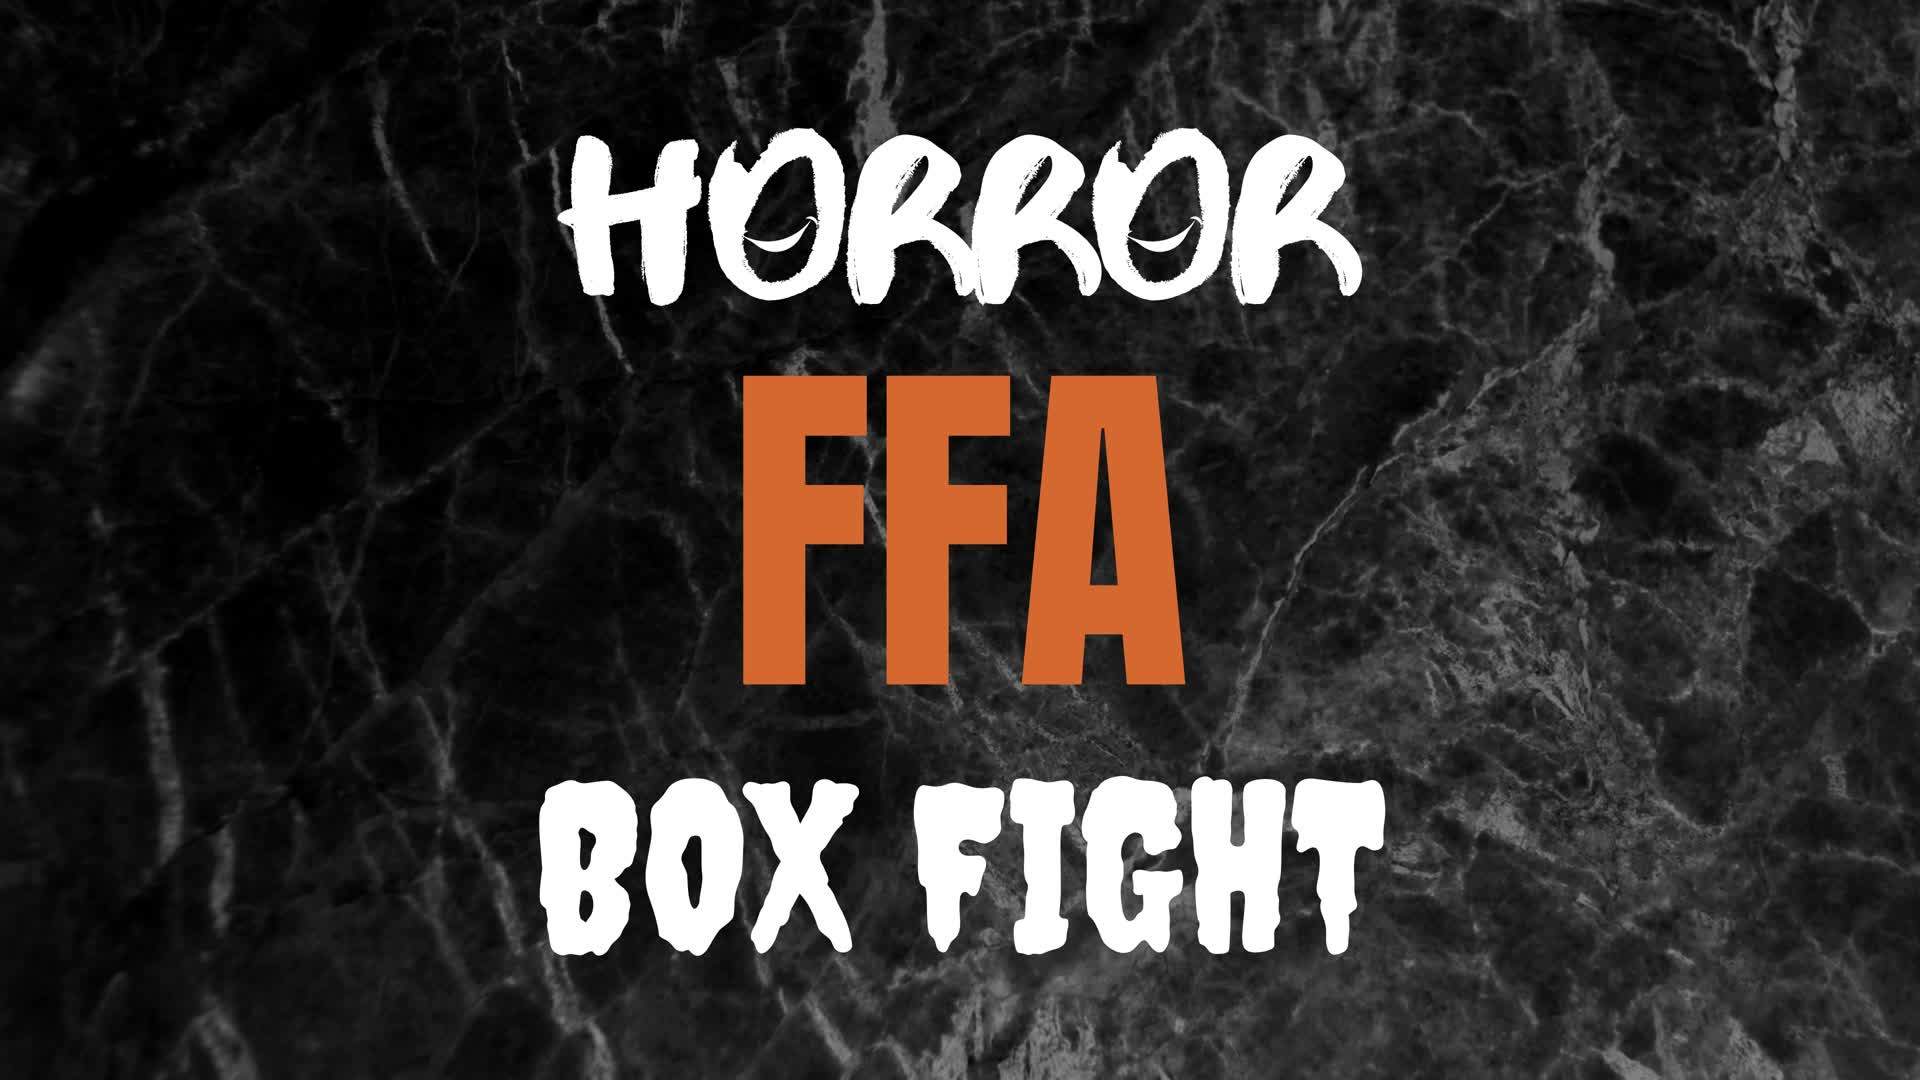 HORROR BOX FIGHT FFA